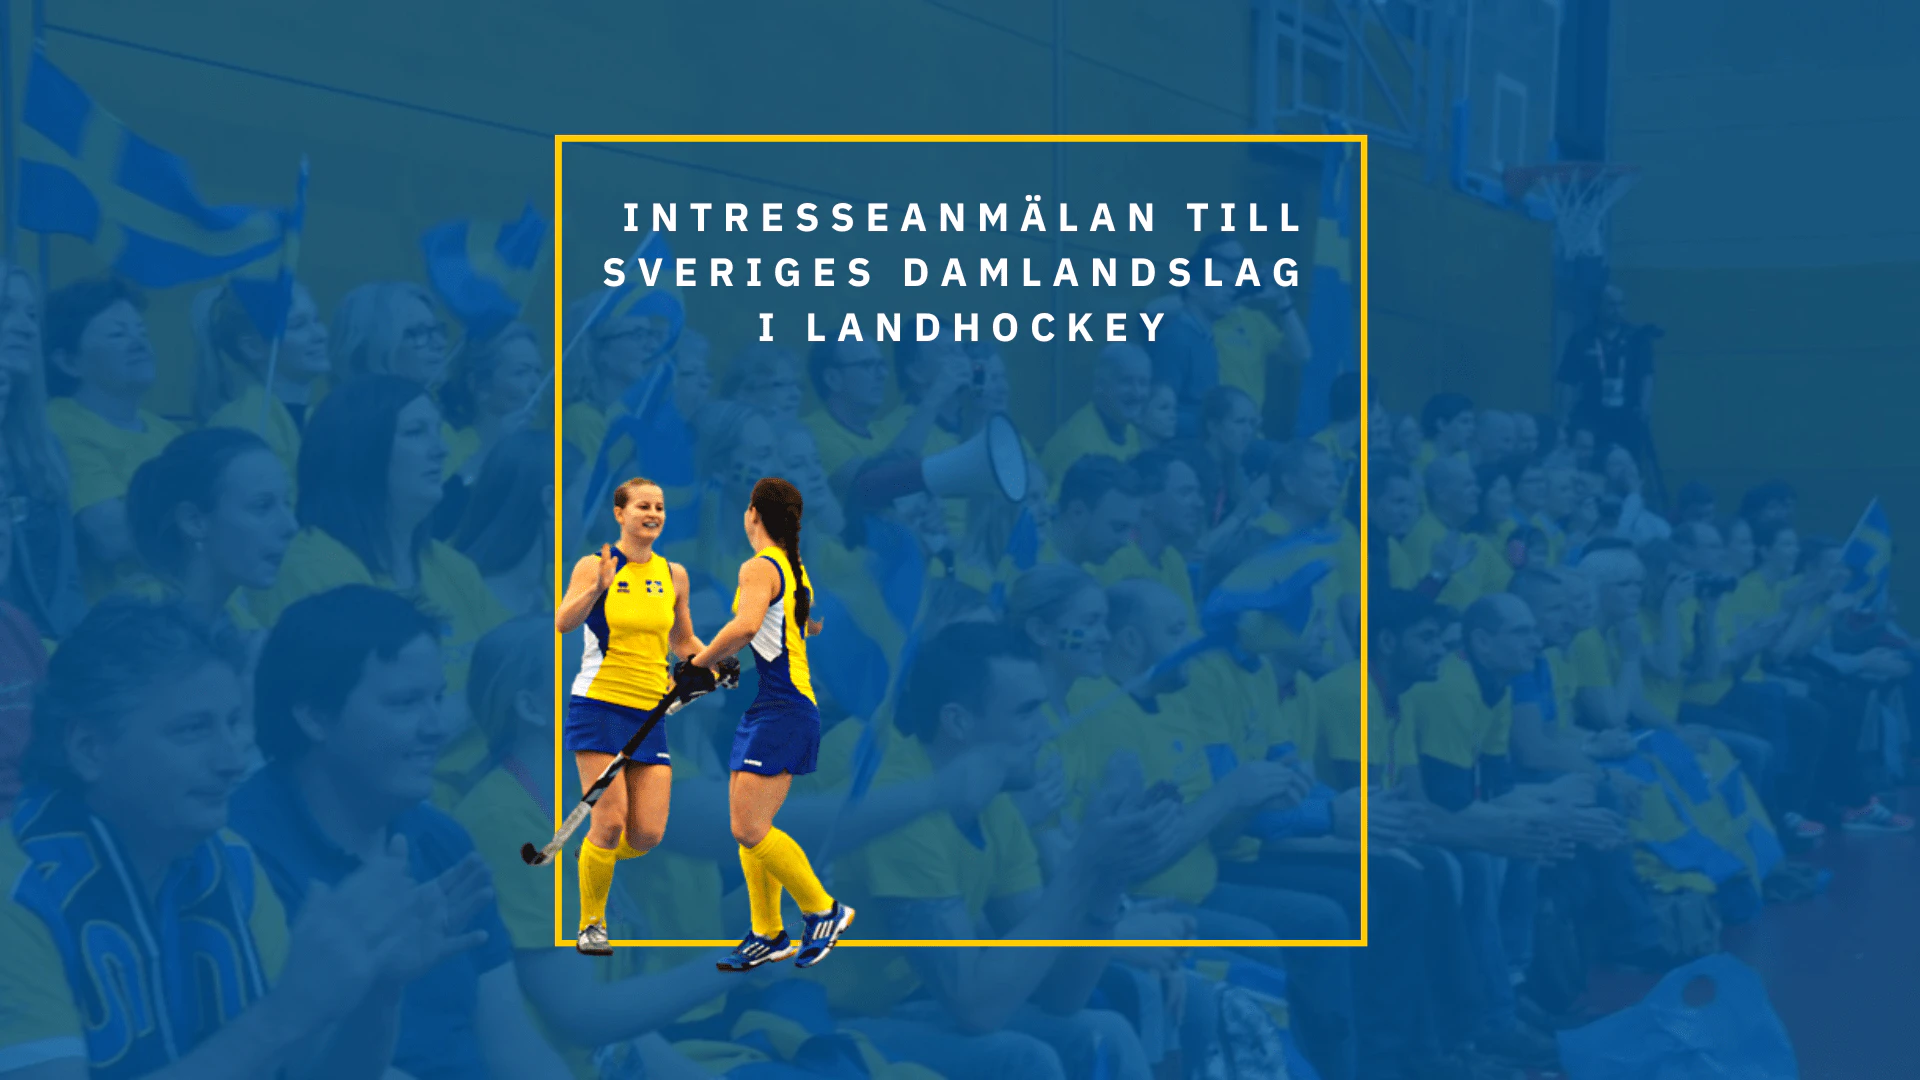 Intresseanmälan till Sveriges damlandslag i landhockey - SWE3 thumbnail